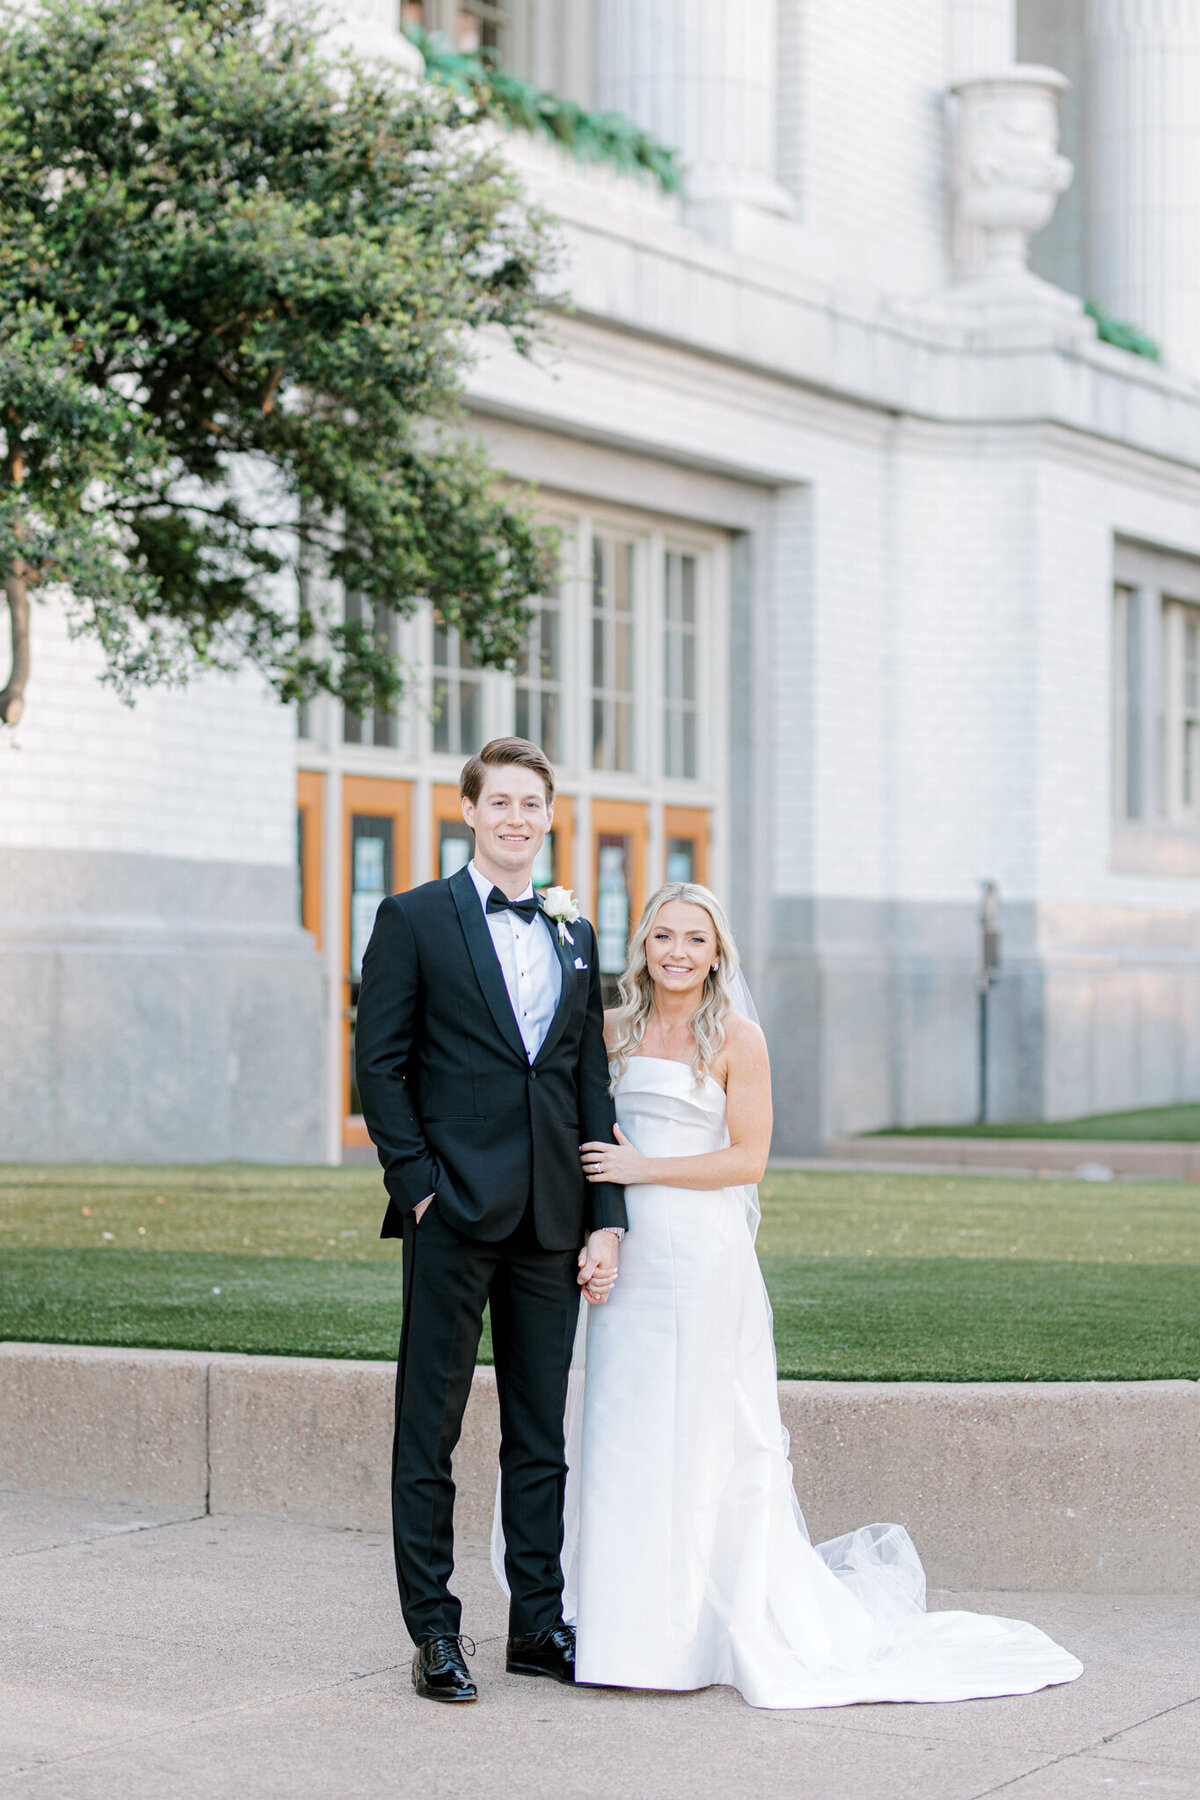 Madison & Michael's Wedding at Union Station | Dallas Wedding Photographer | Sami Kathryn Photography-9